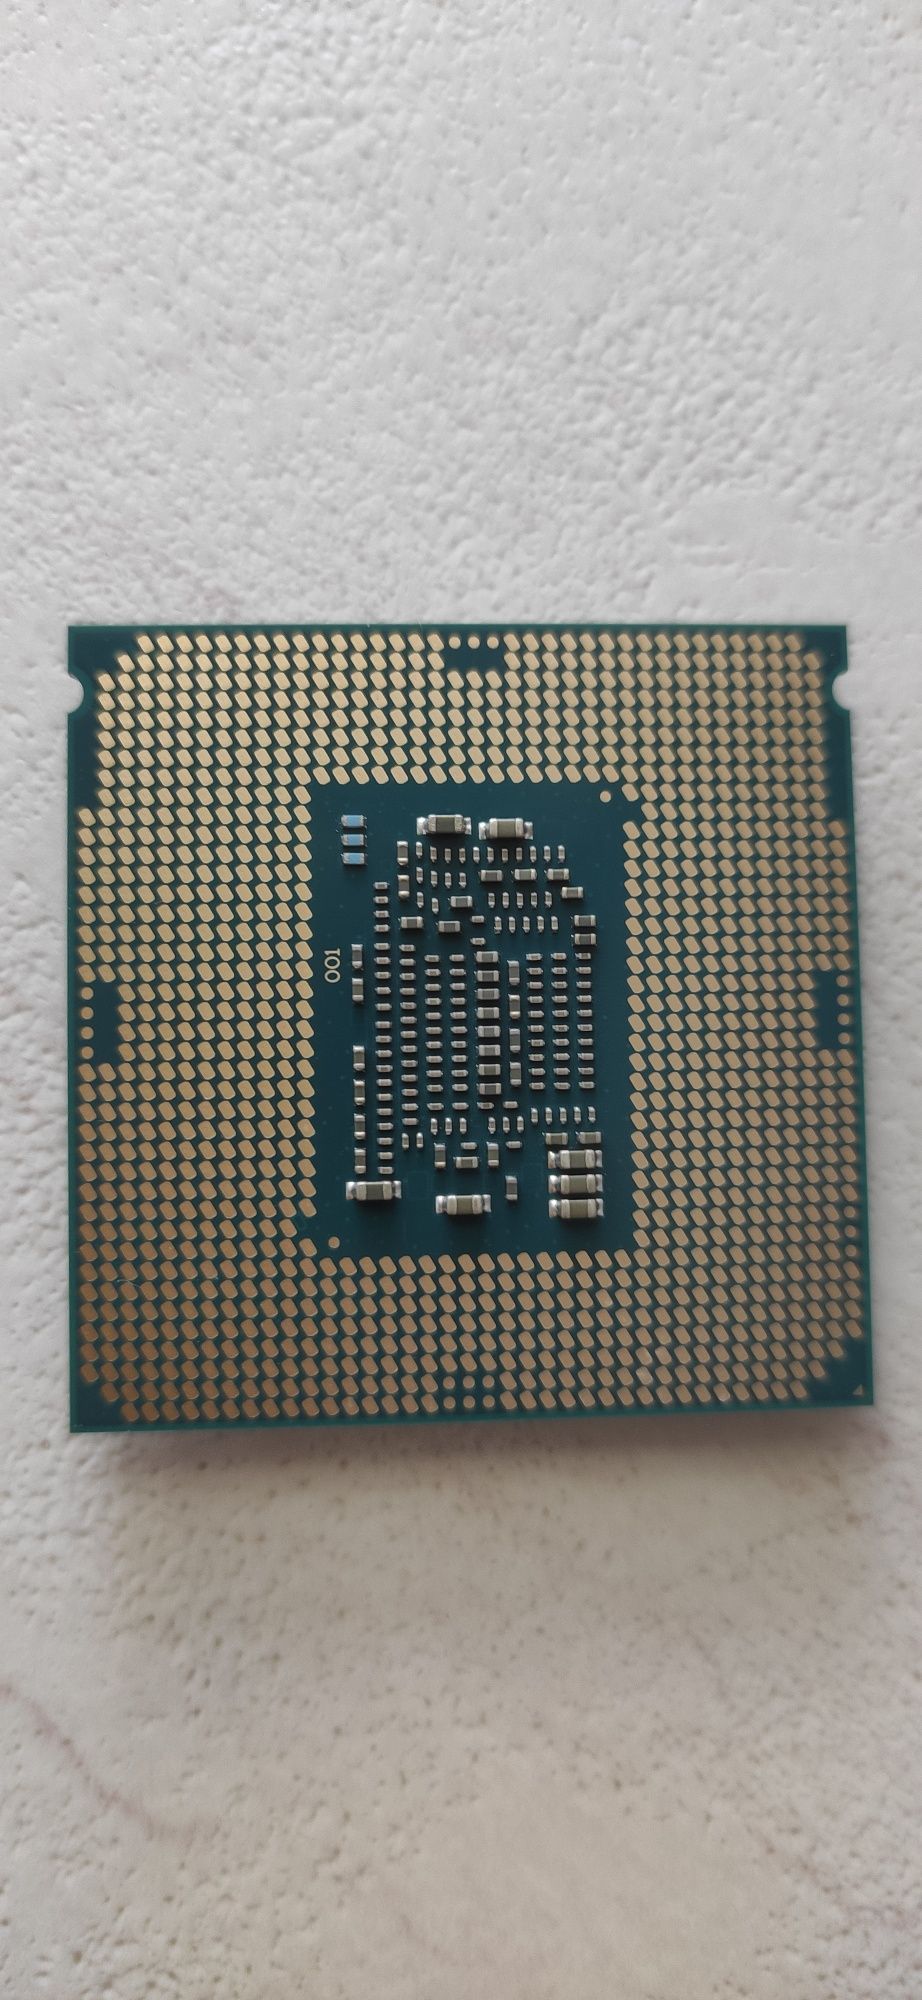 Процессор Intel Celeron G4920 3.2GHz/8GT/s/2MB s1151